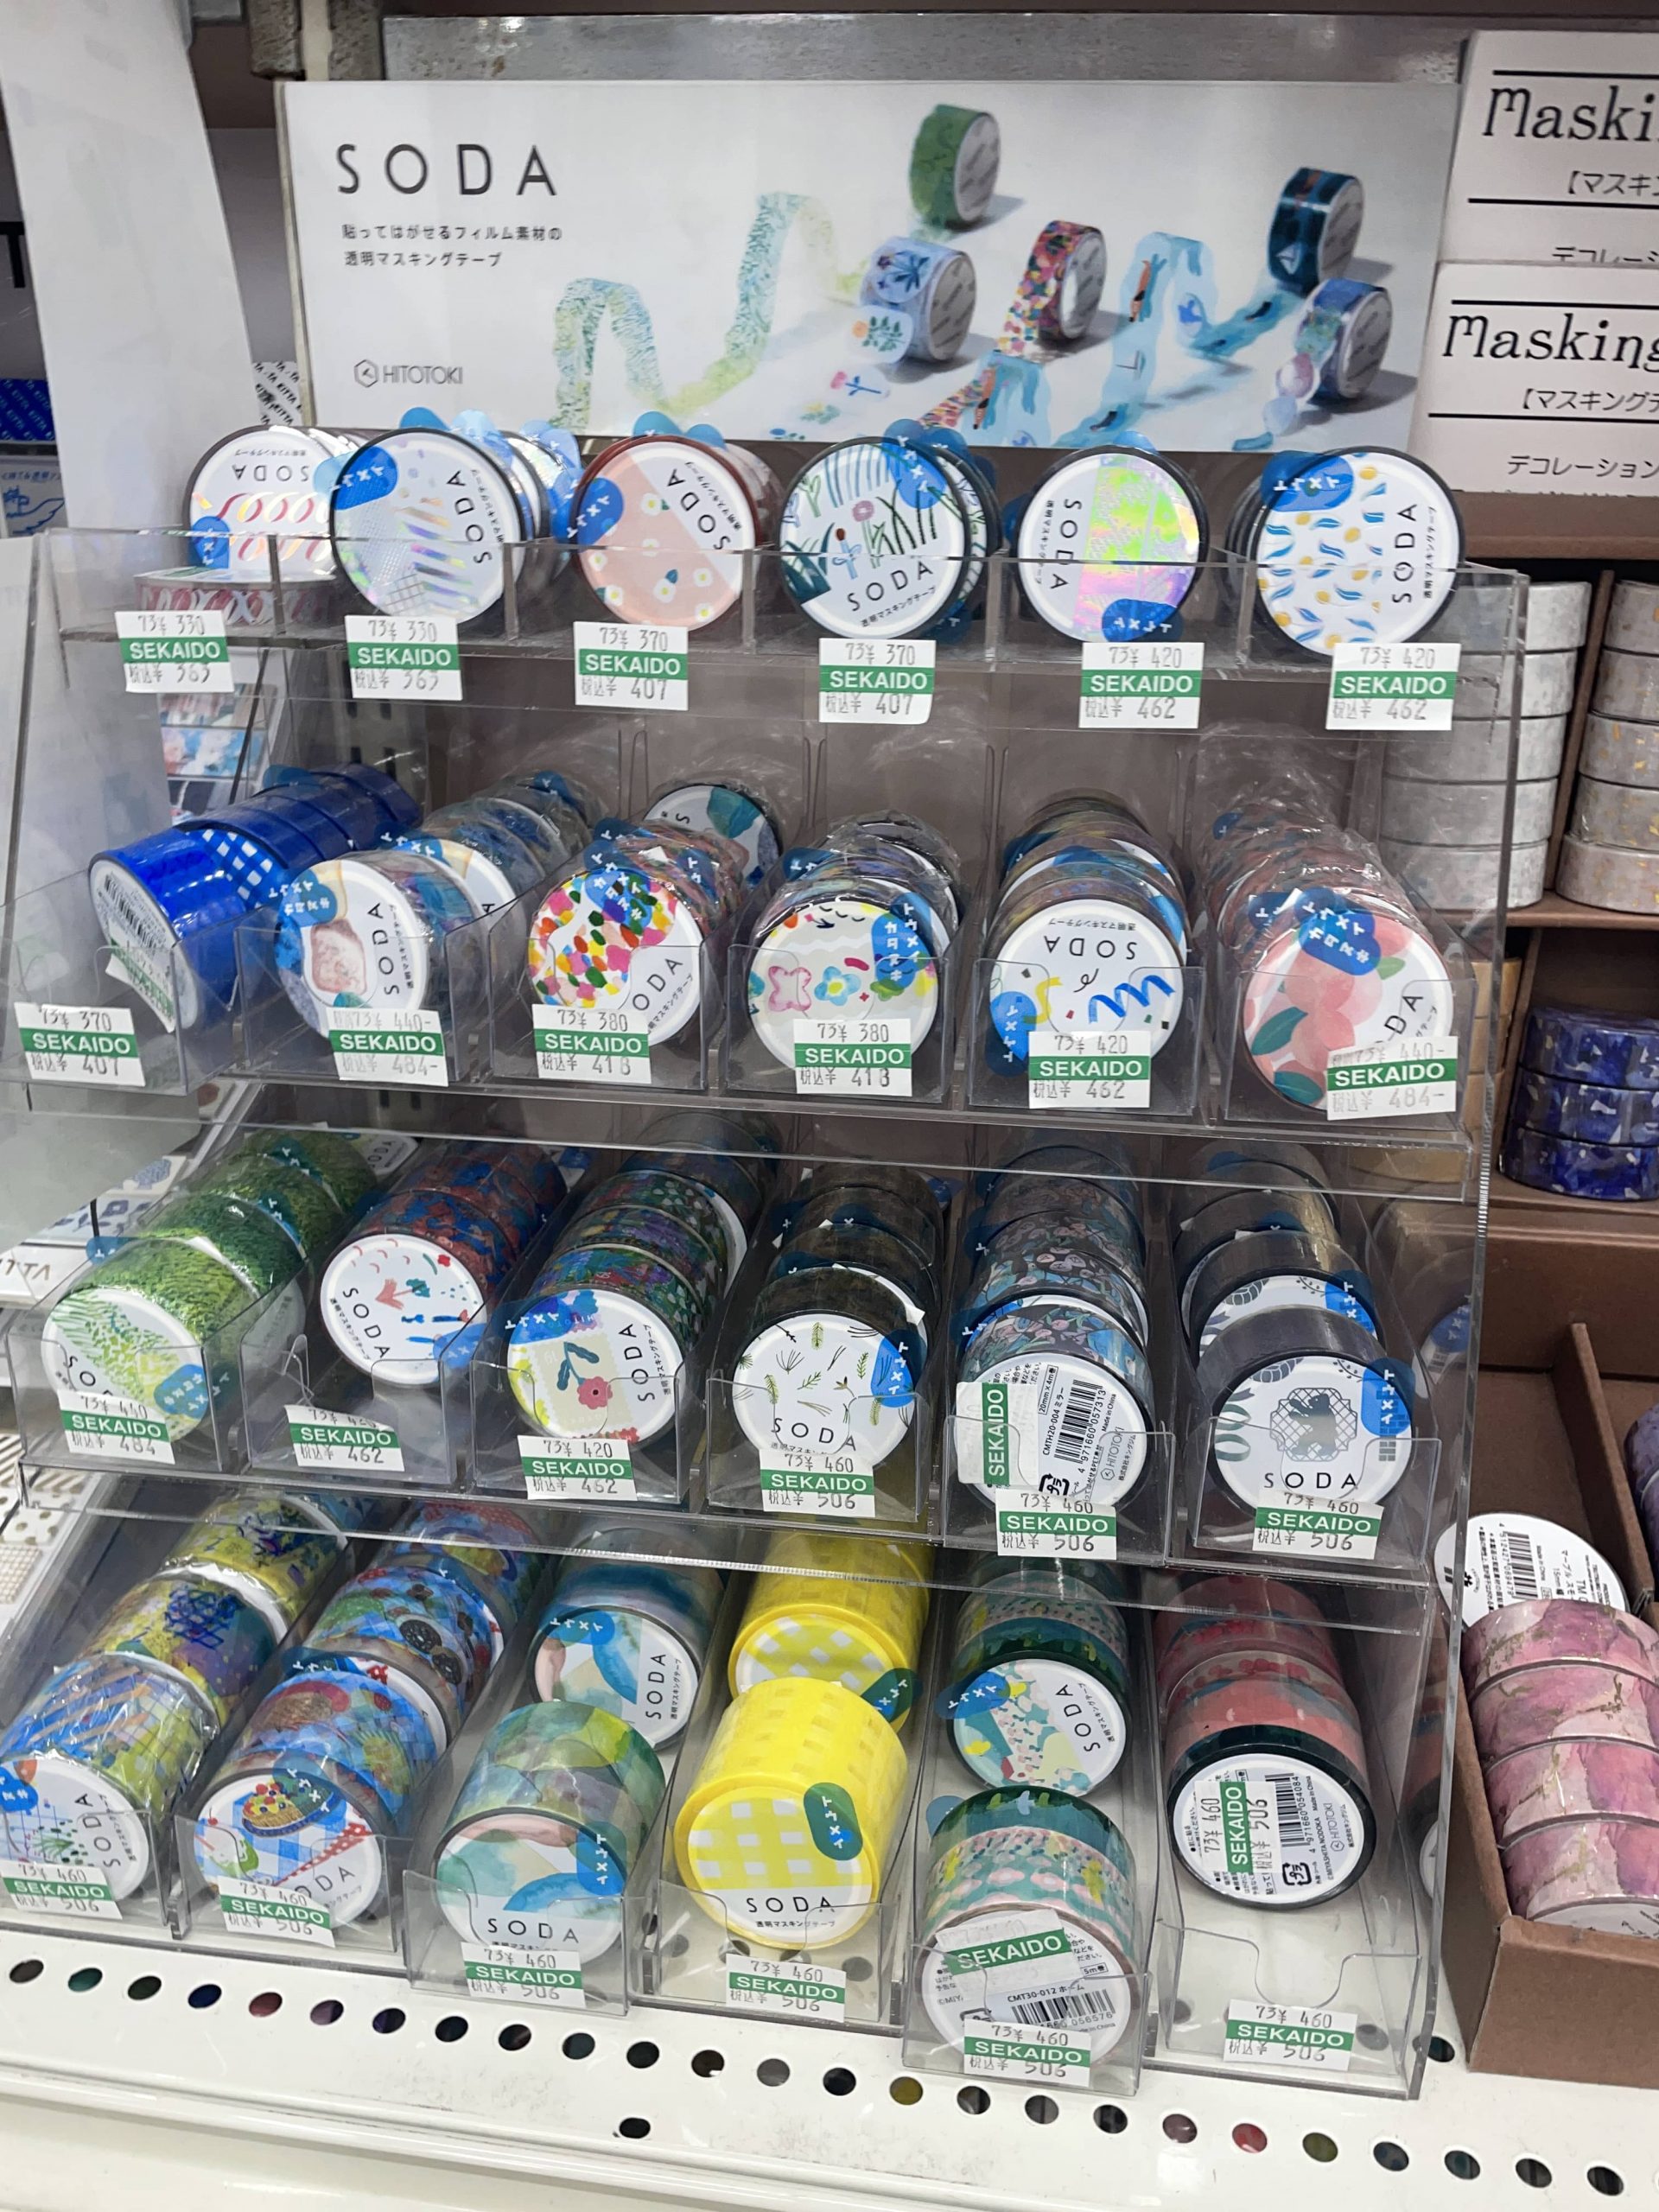 sekaido tokyo japan stationery shopping washi tape highlighters pens pilot sakura stamps stickers best planner supplies soda washi tape